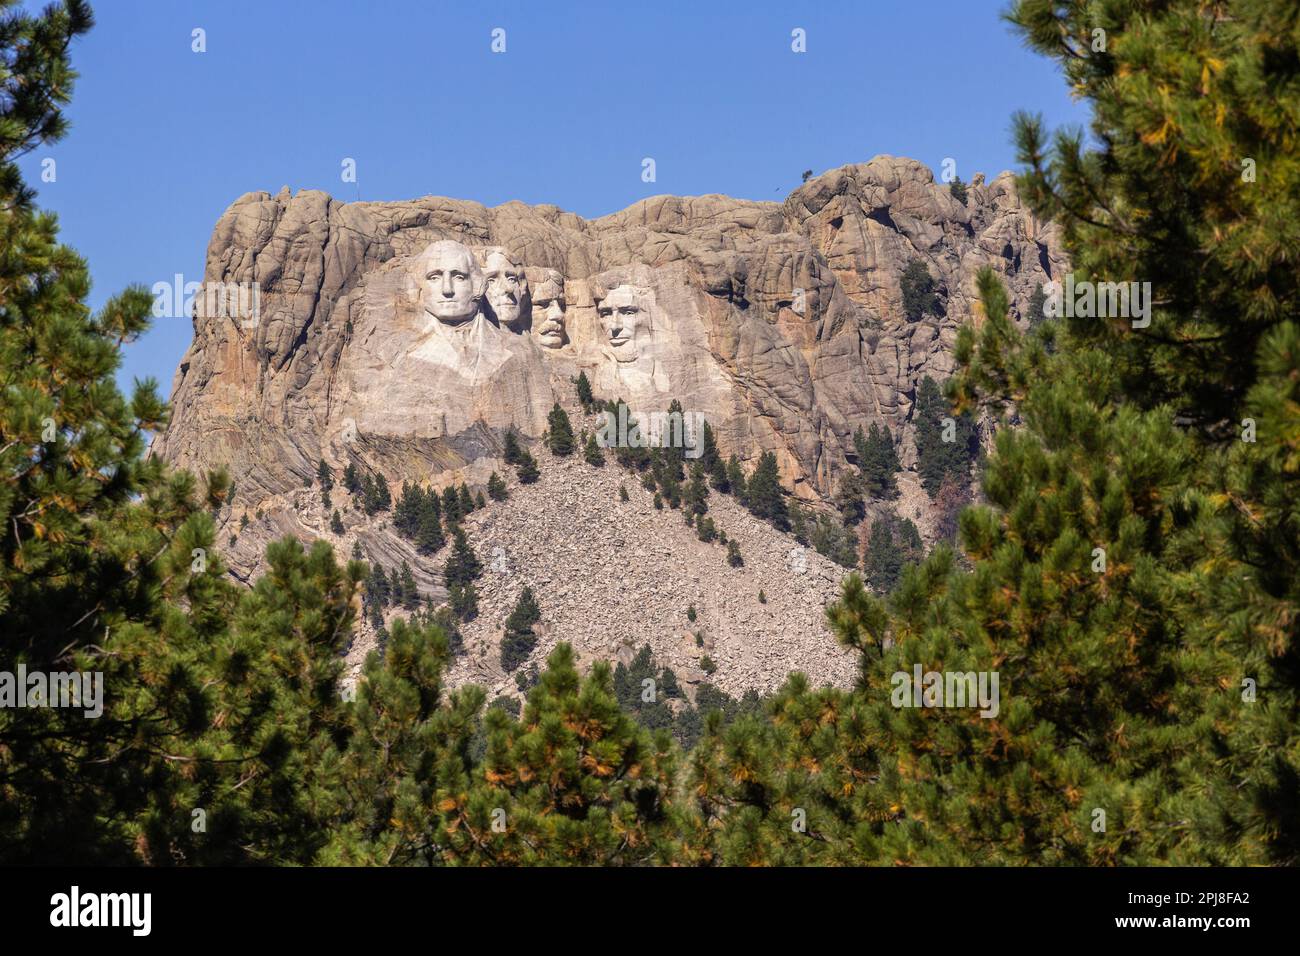 Mount Rushmore view from Iron Mountain Highway, South Dakota, United States of America Stock Photo